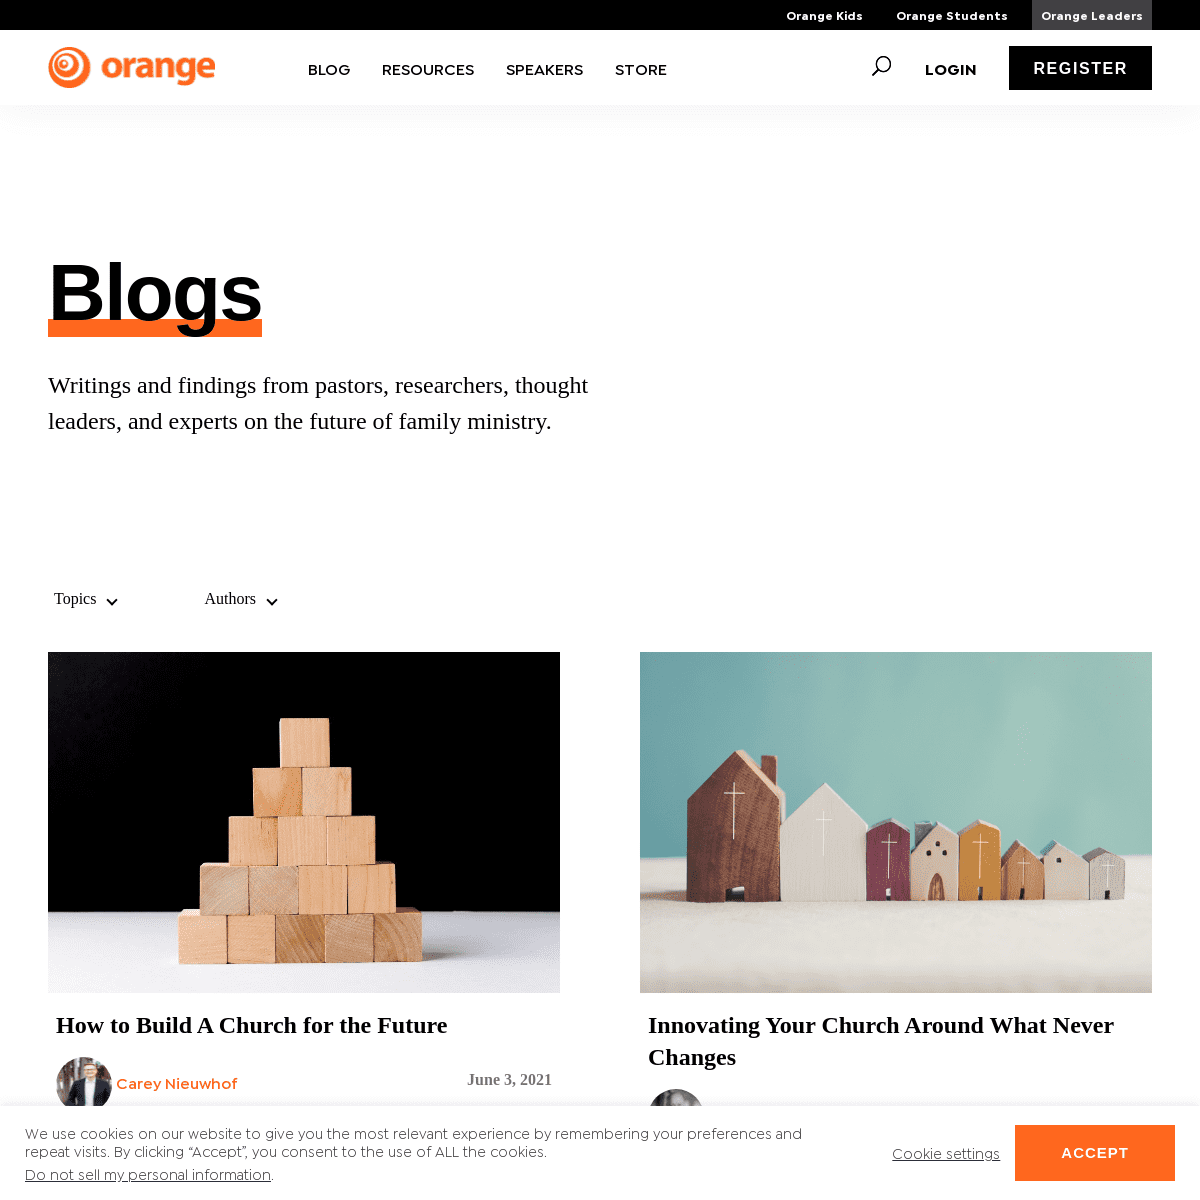 A complete backup of https://orangeblogs.org